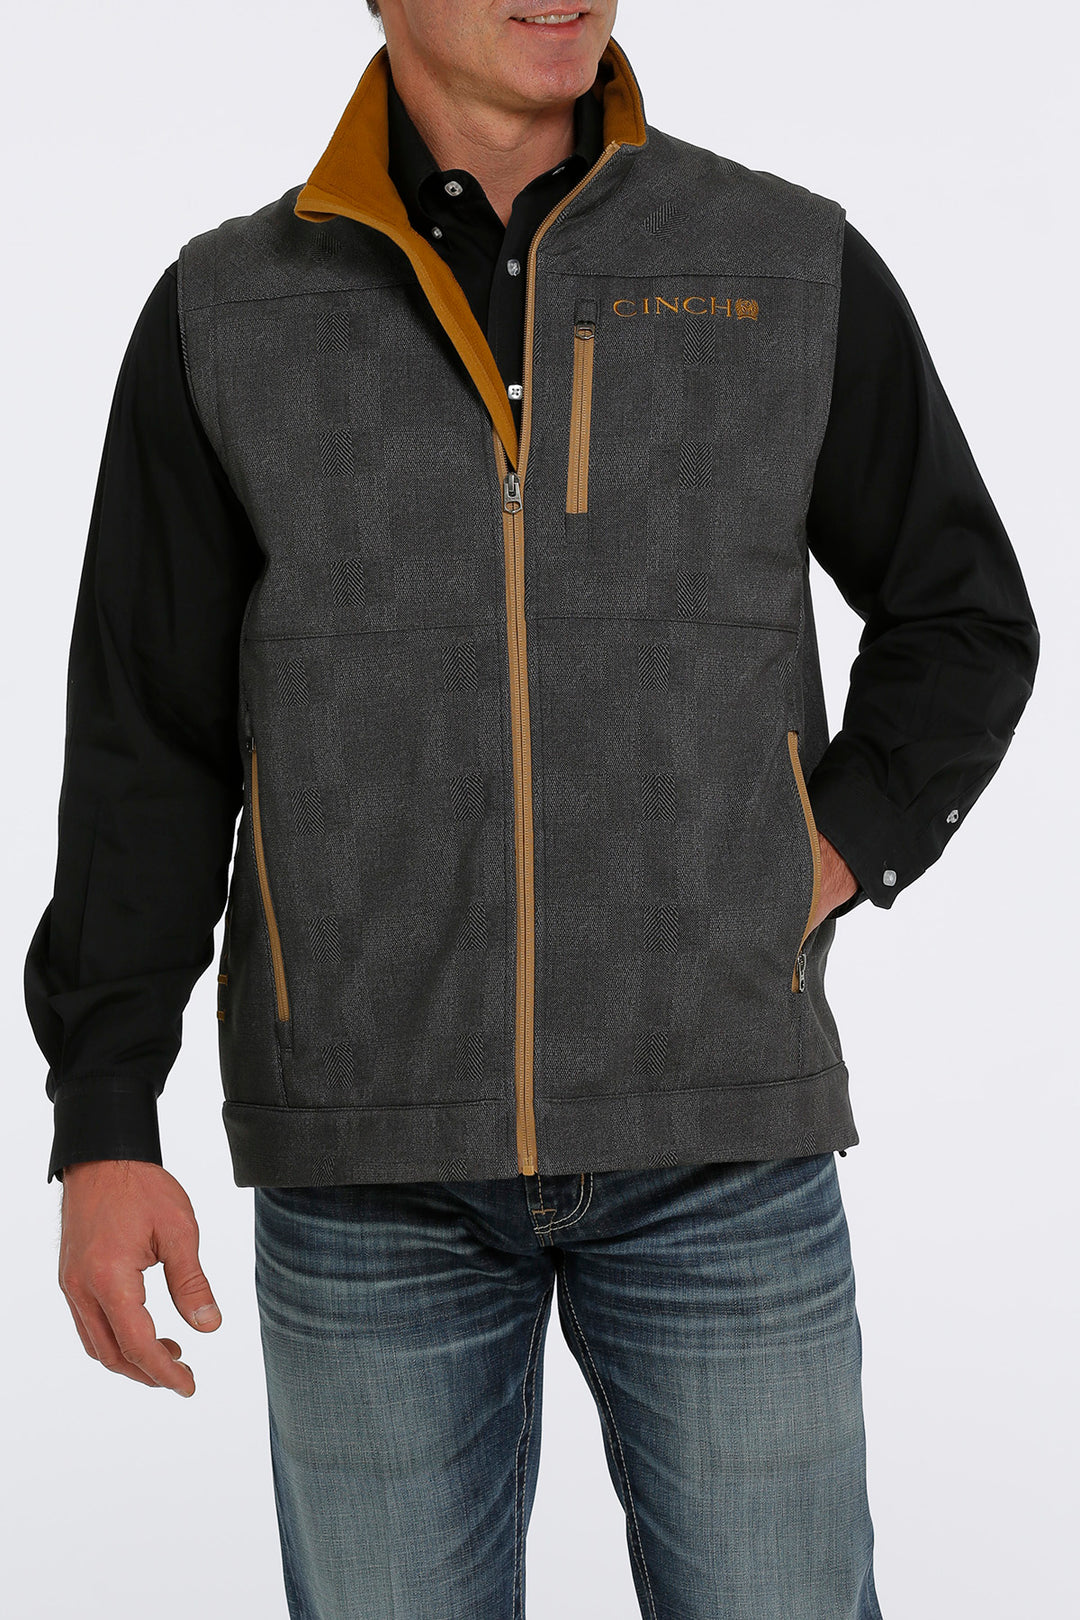 Cinch | Charcoal Bonded Concealed Carry Vest